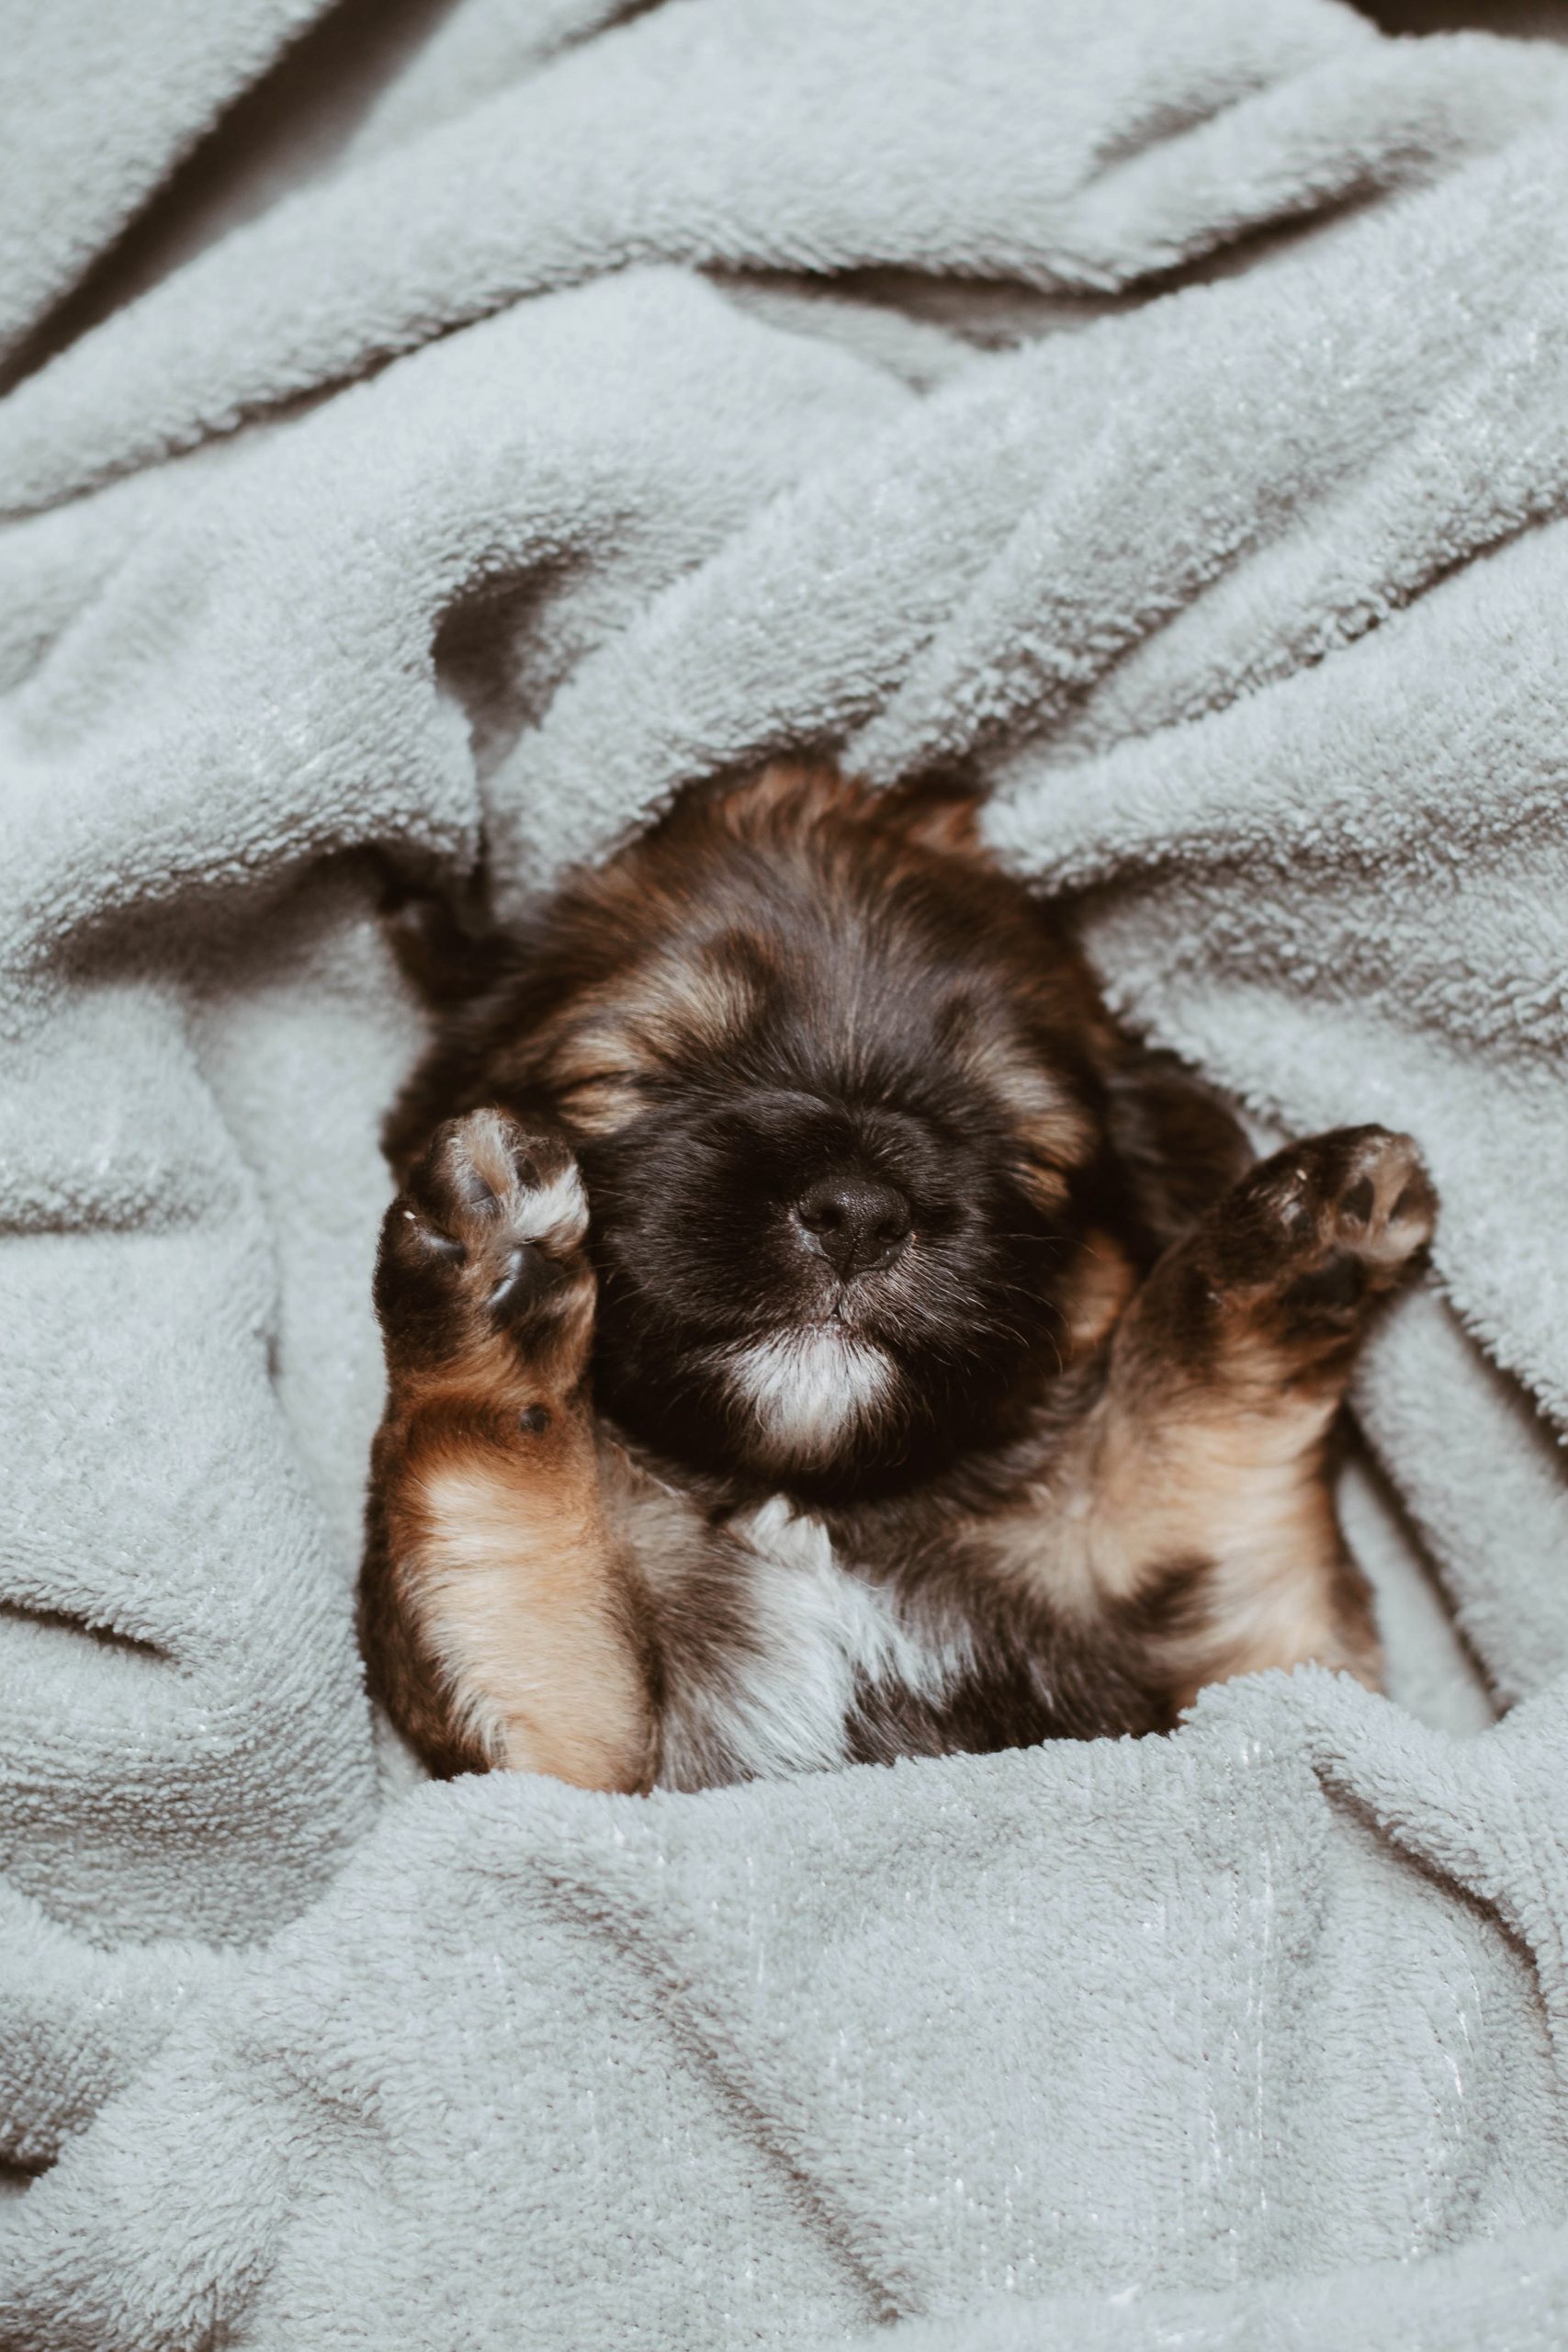 puppy sleeping in a blanket